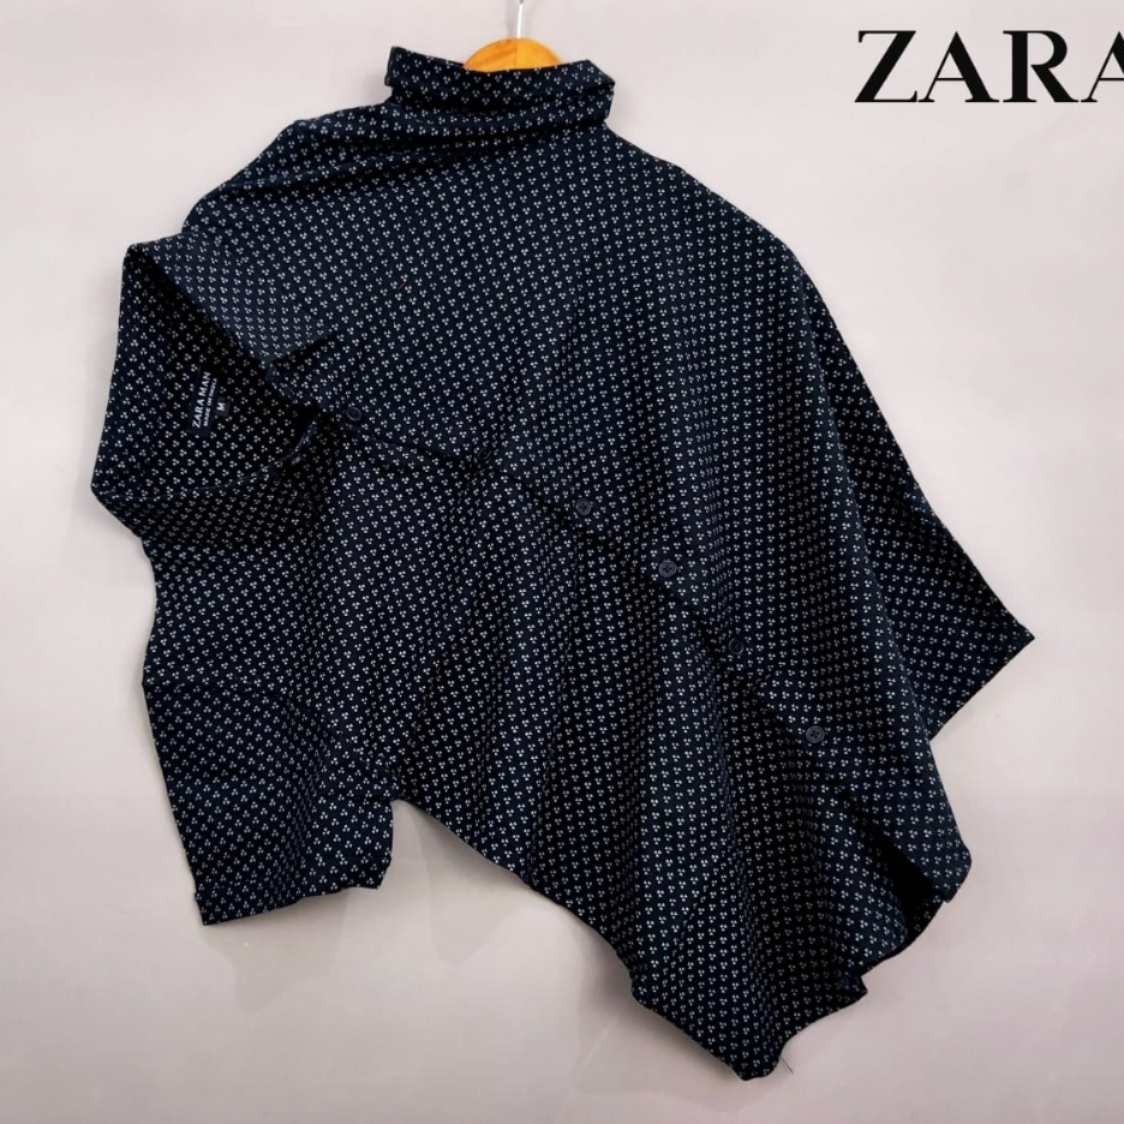 Zara superior quality front button polo tshirt